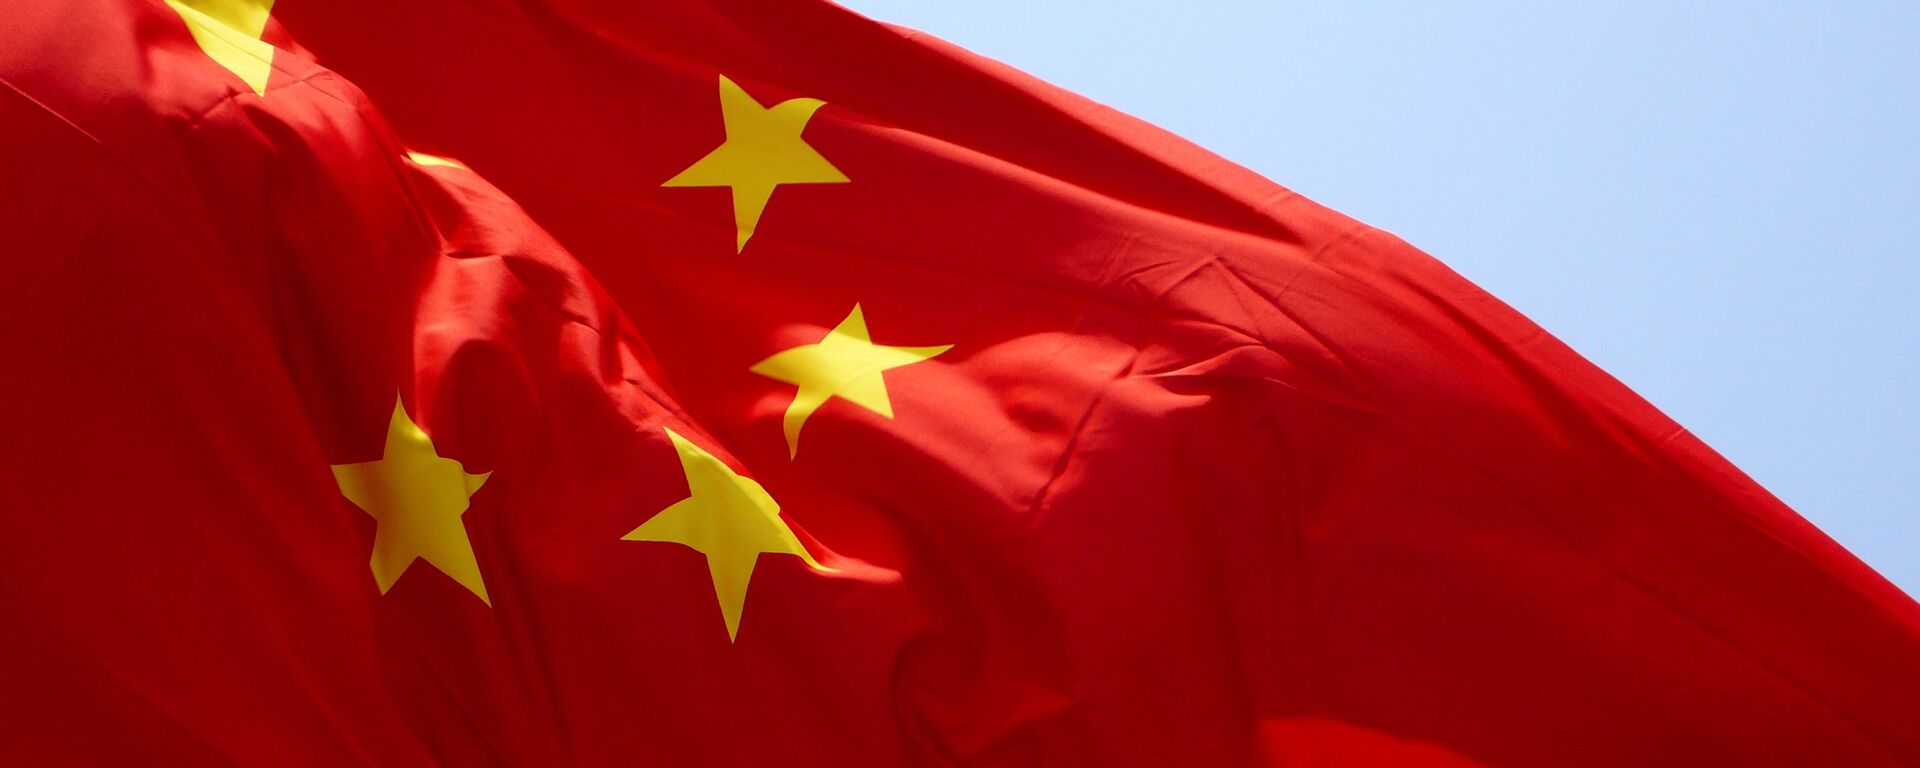 Bandera de China - Sputnik Mundo, 1920, 05.03.2021